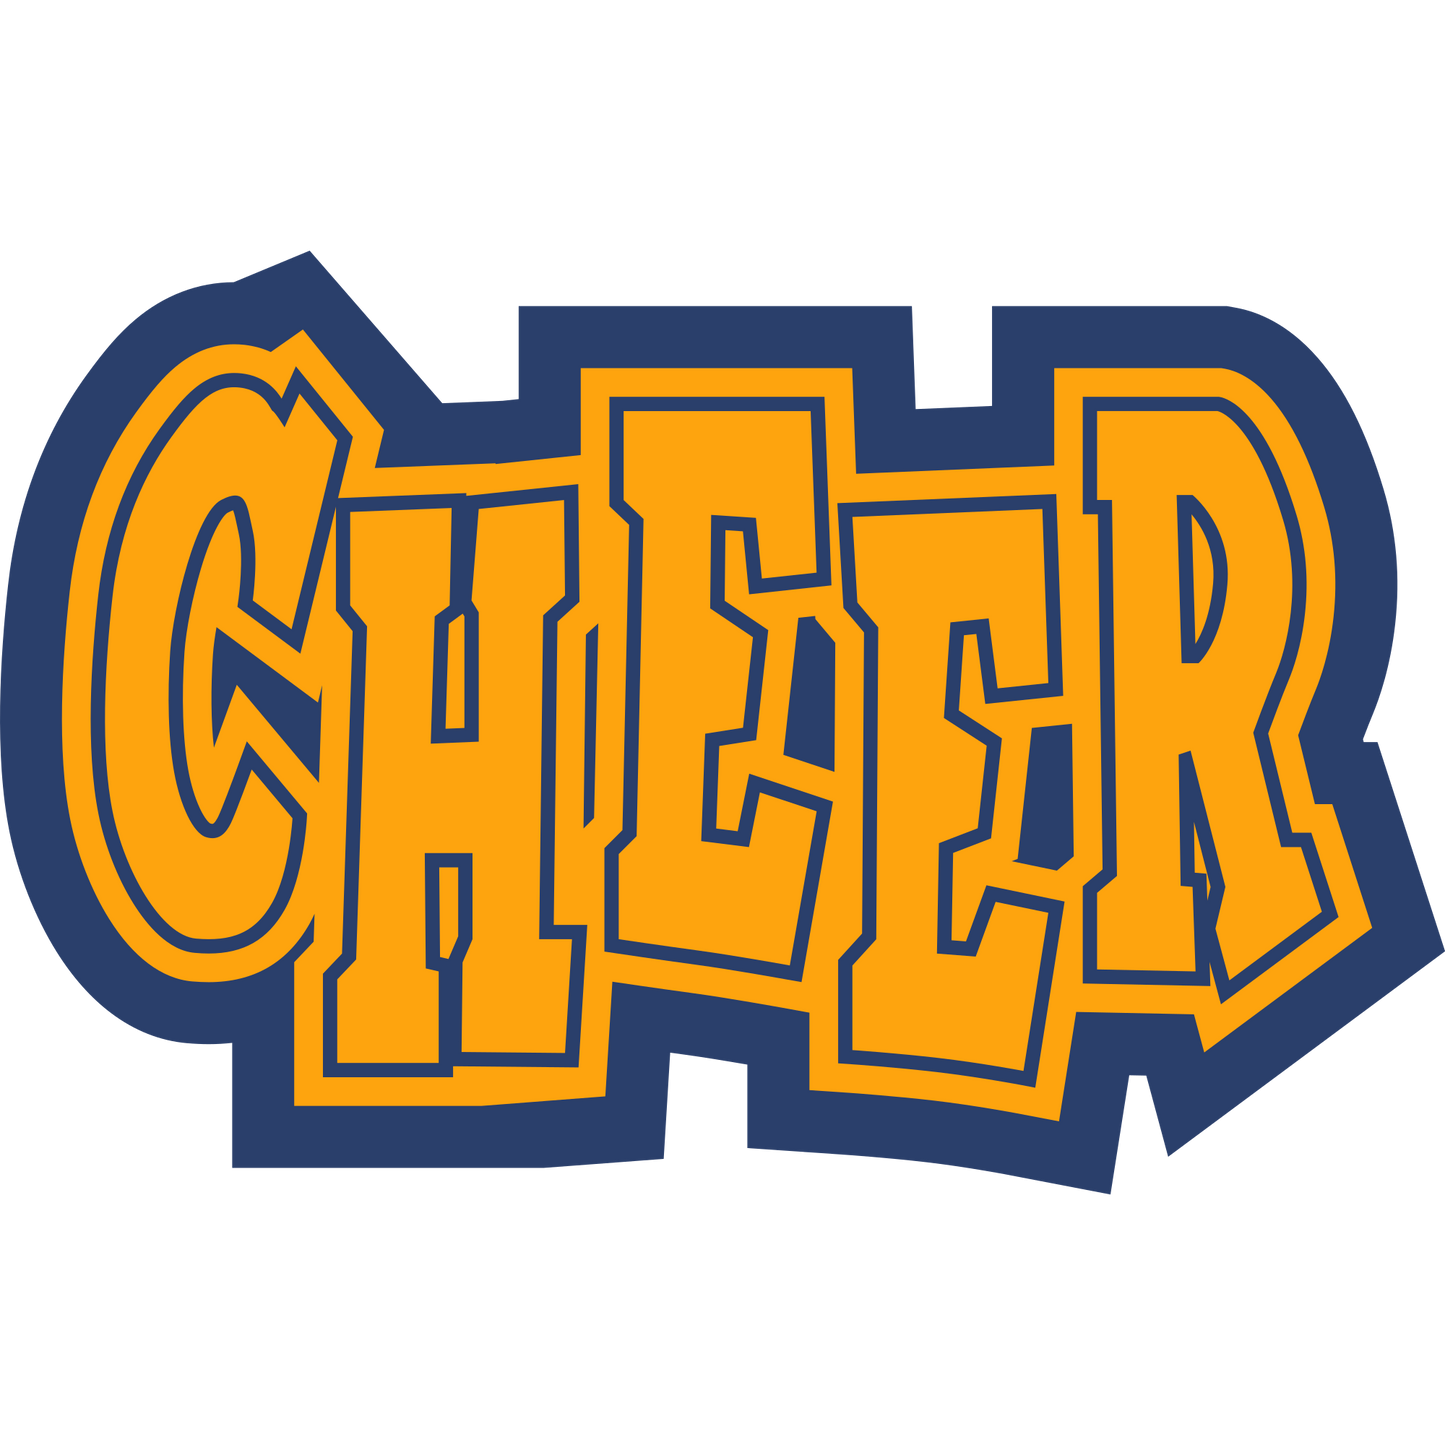 TCHEER - Cheer Sleeve Patch